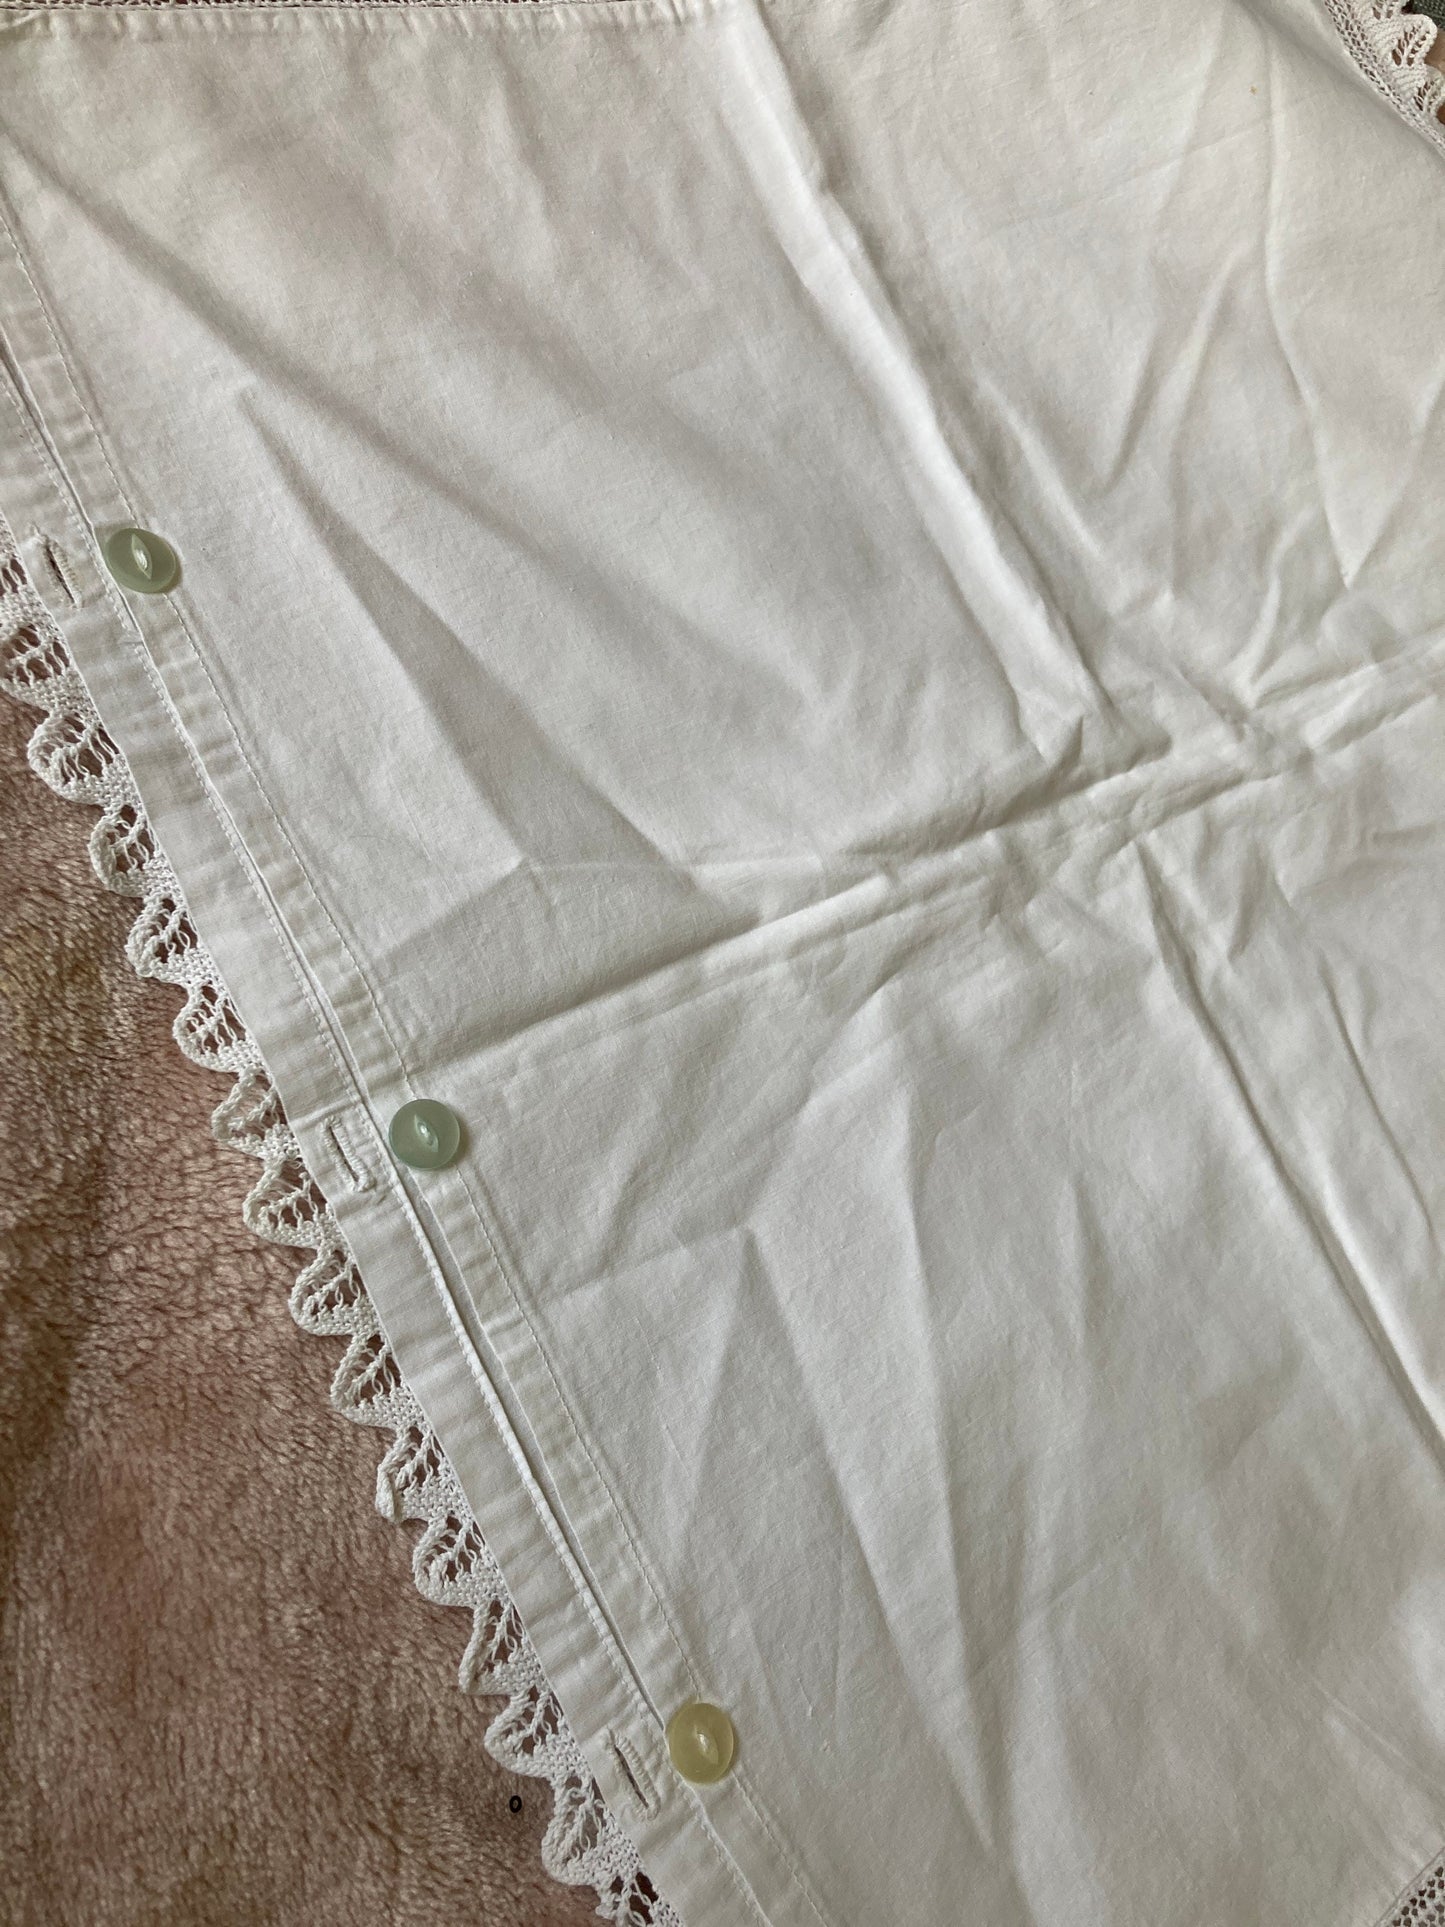 Vintage pure white cotton crochet edge square embroidered linen cottage pillow cushion cover button closure 20 inch